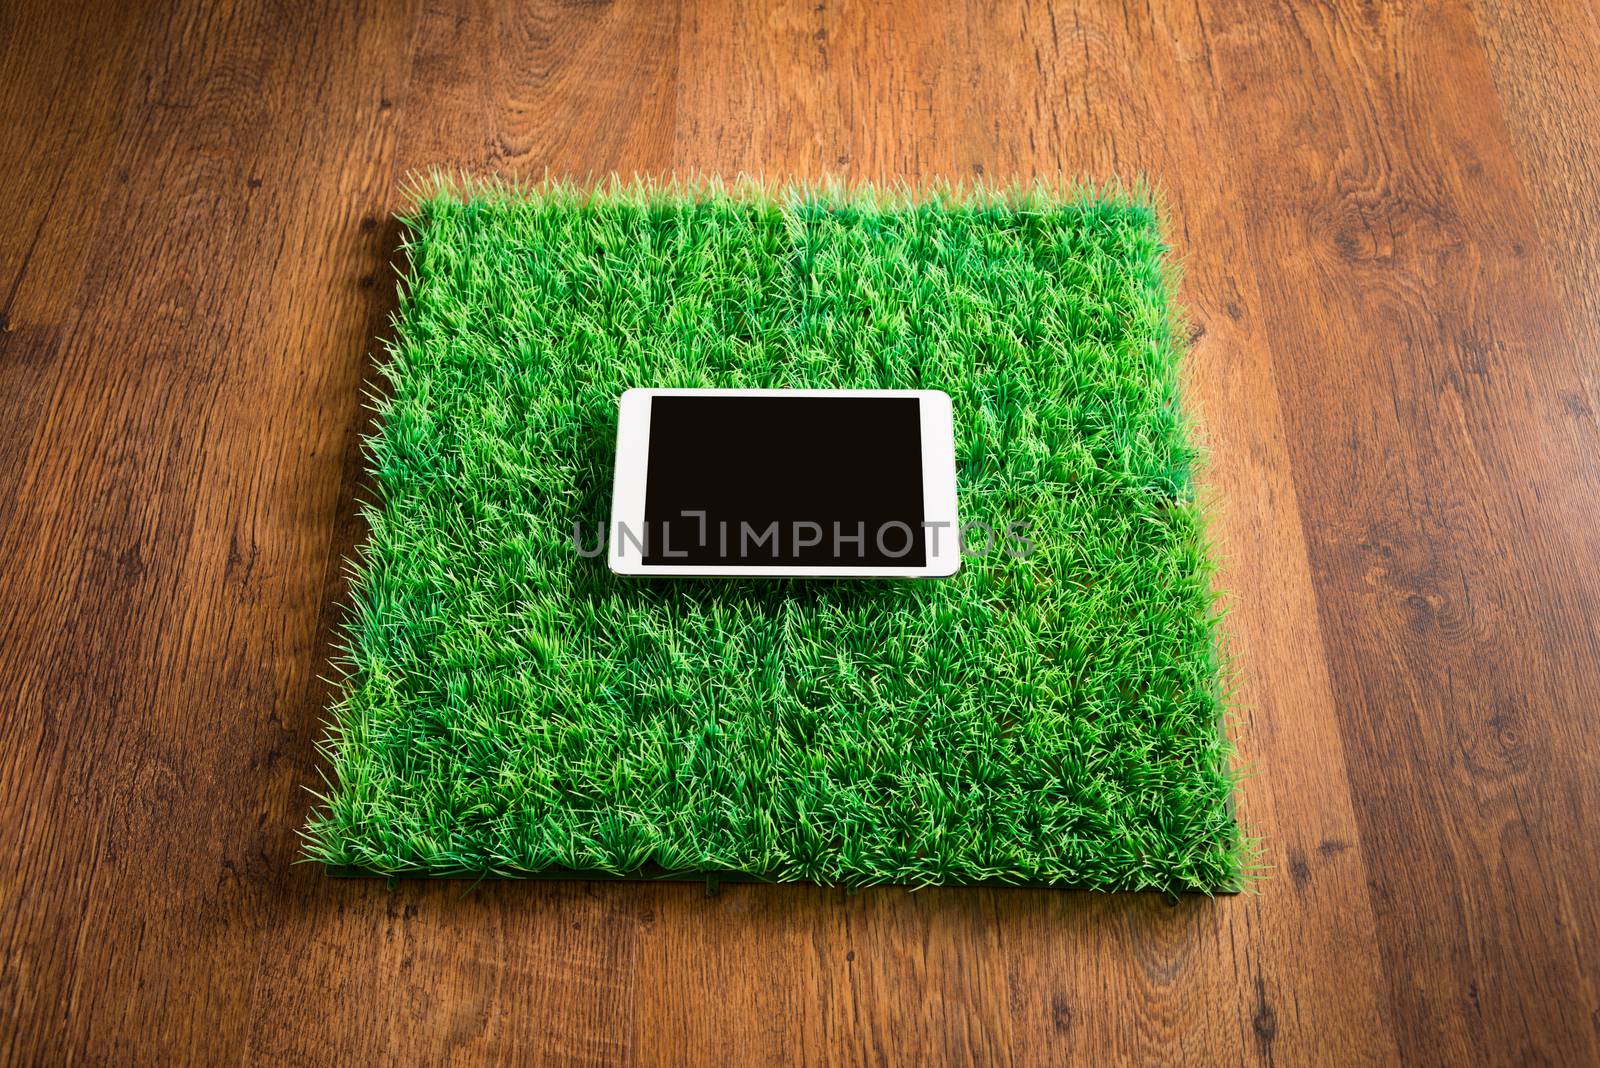 Blank ipad on squared artifical grass tile lying on hardwood floor.